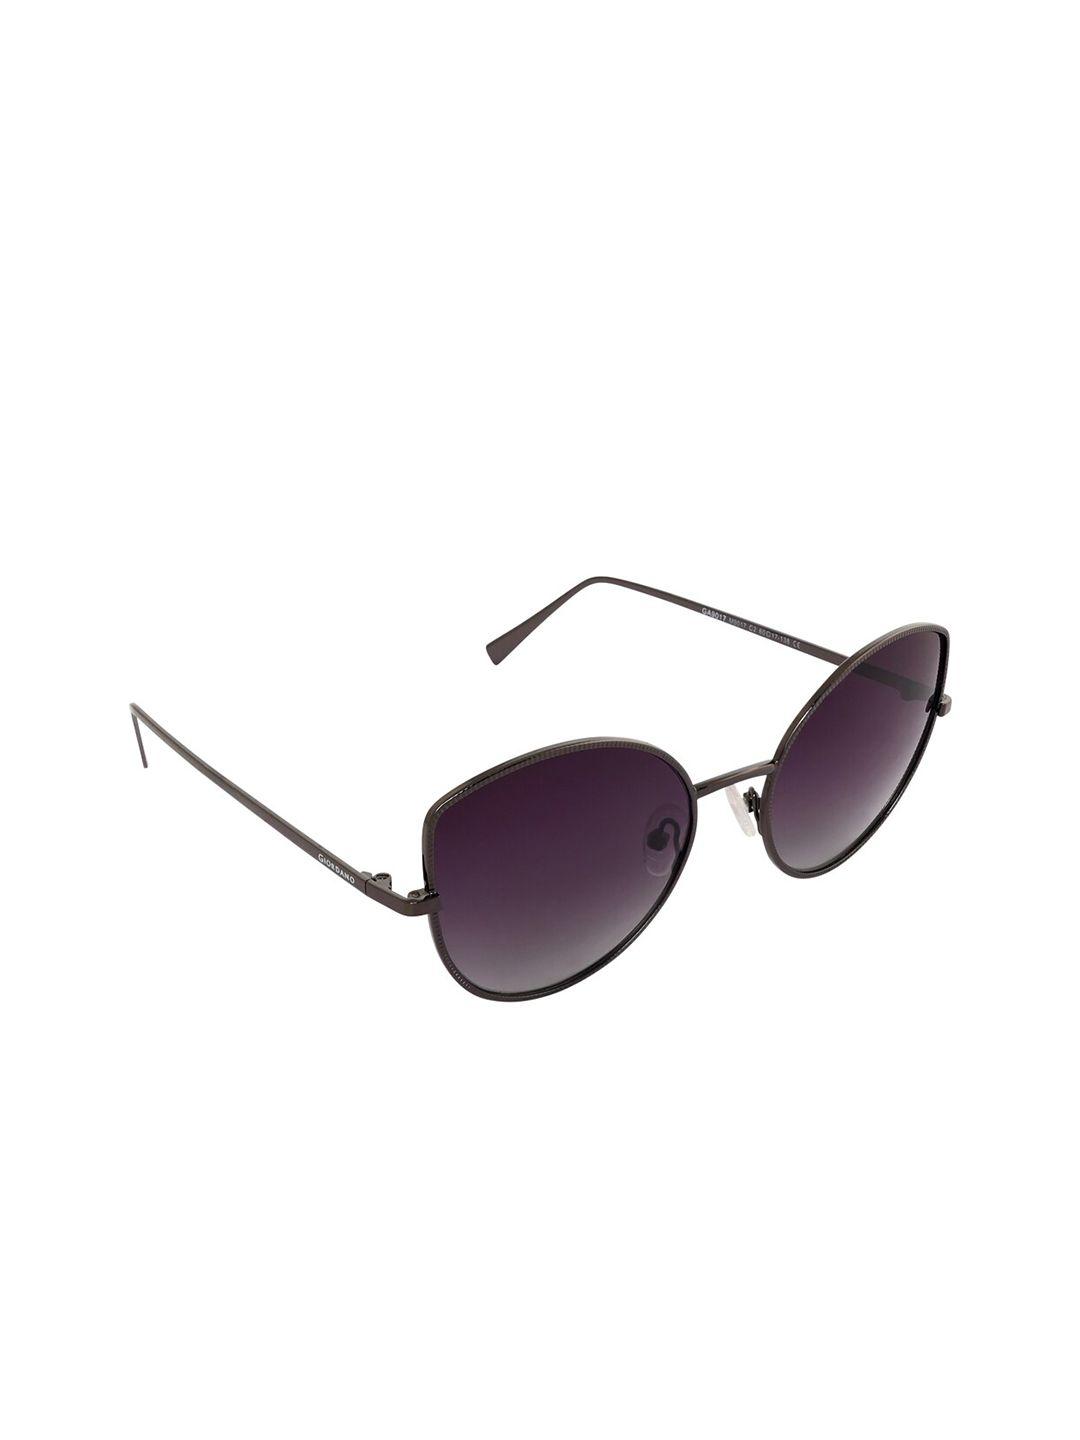 giordano women grey lens & gunmetal-toned cateye sunglasses ga9017c02-smoke